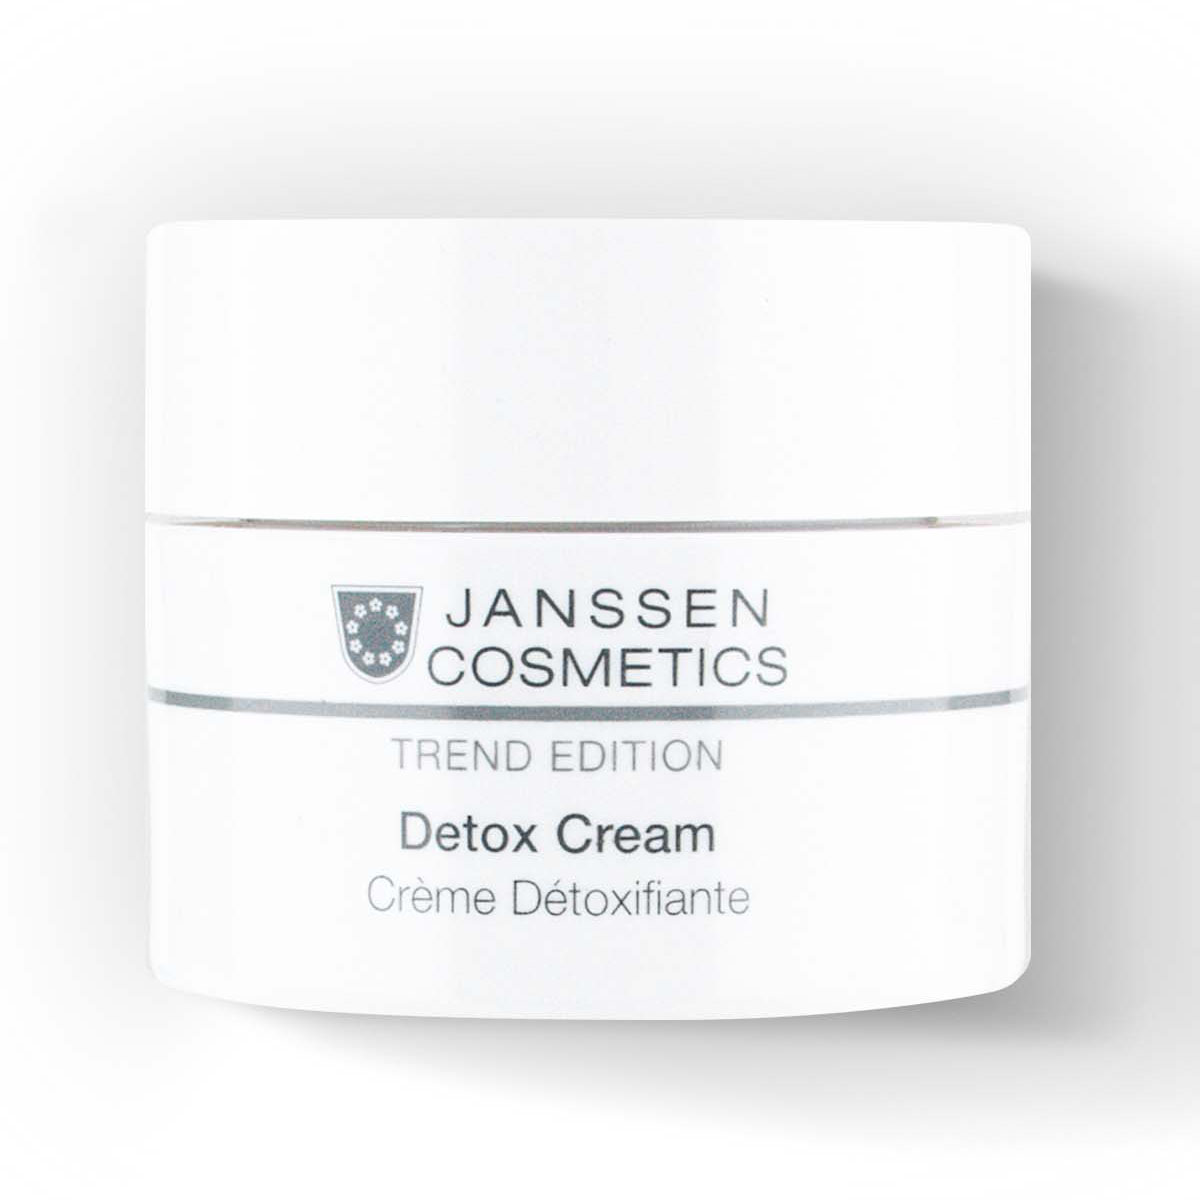 Janssen Cosmetics Детокс-крем Detox Cream, 50 мл (Janssen Cosmetics, Trend Edition) janssen cosmetics набор для сияния кожи крем 50 мл сыворотка 30 мл janssen cosmetics trend edition